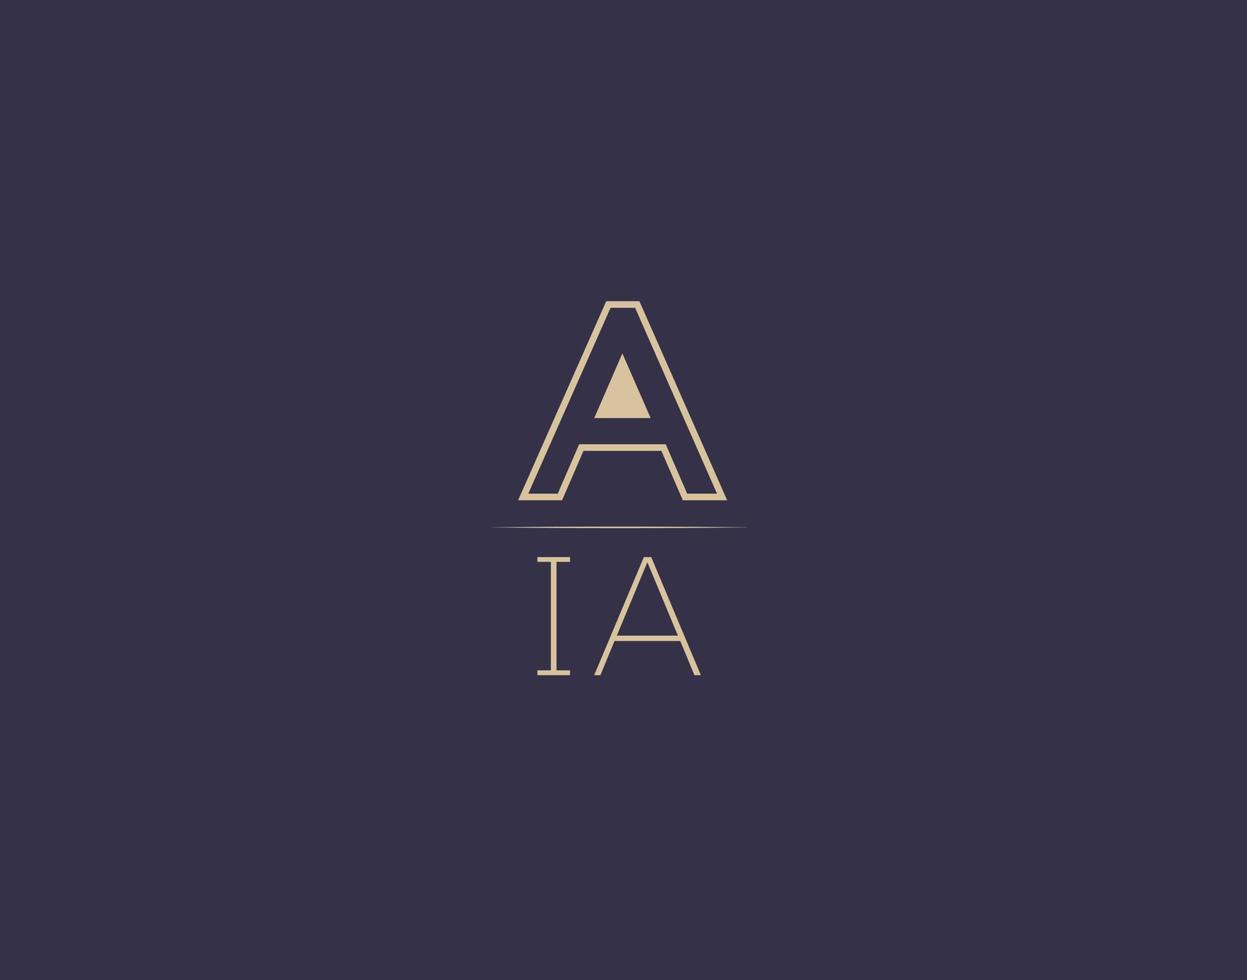 AIA letter logo design modern minimalist vector images